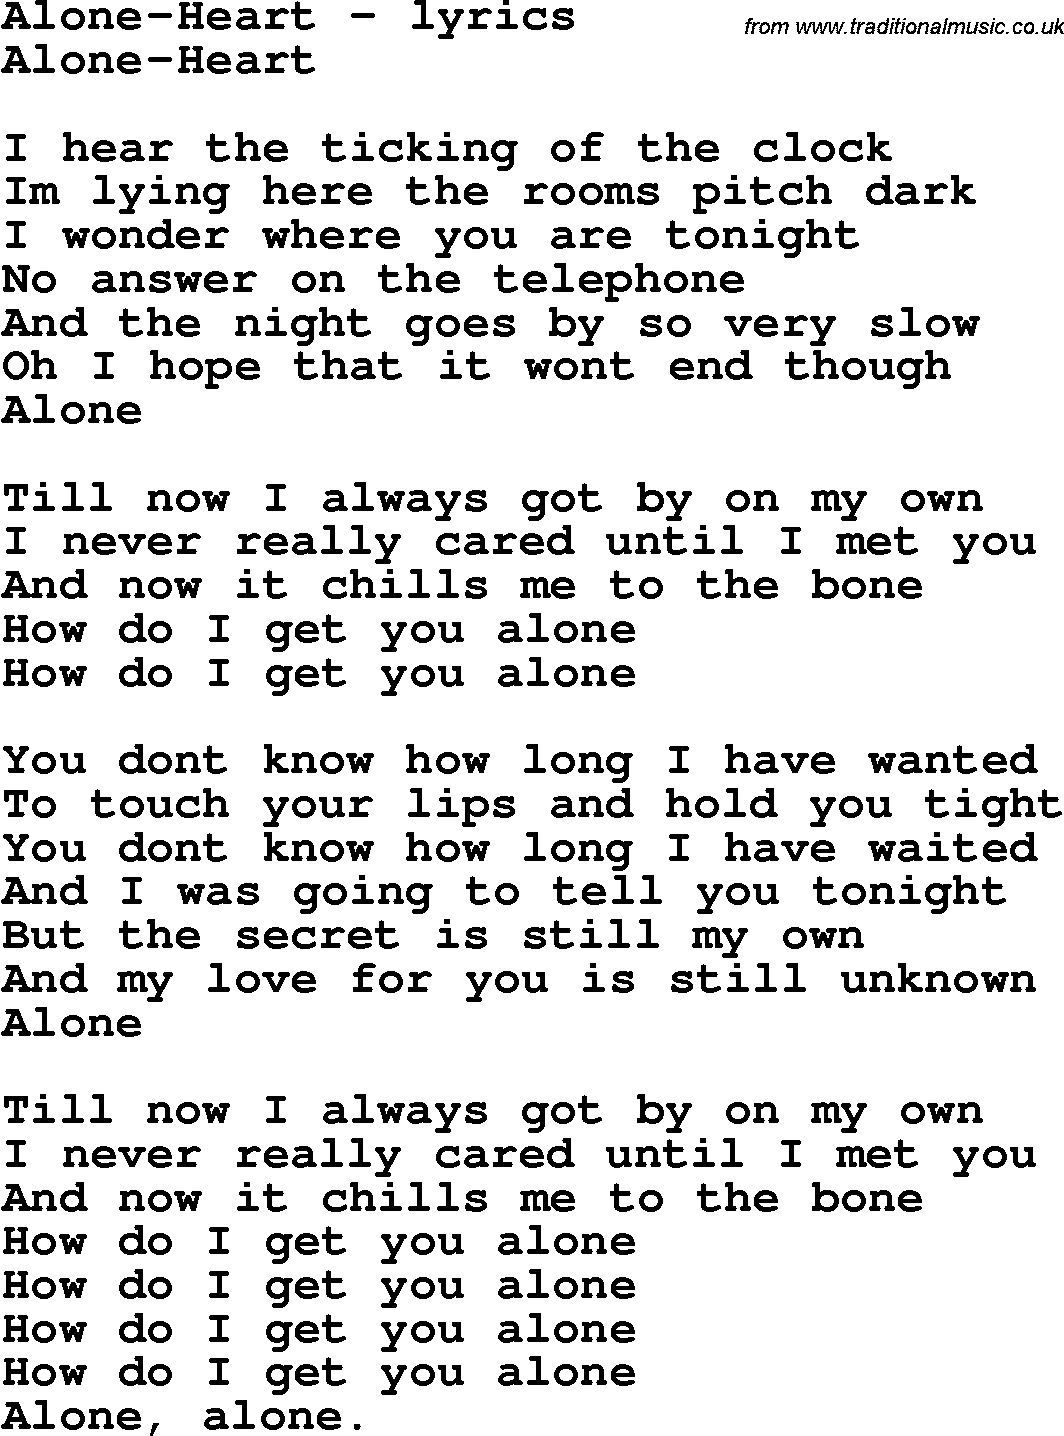 Love Song Lyrics for: Alone-Heart